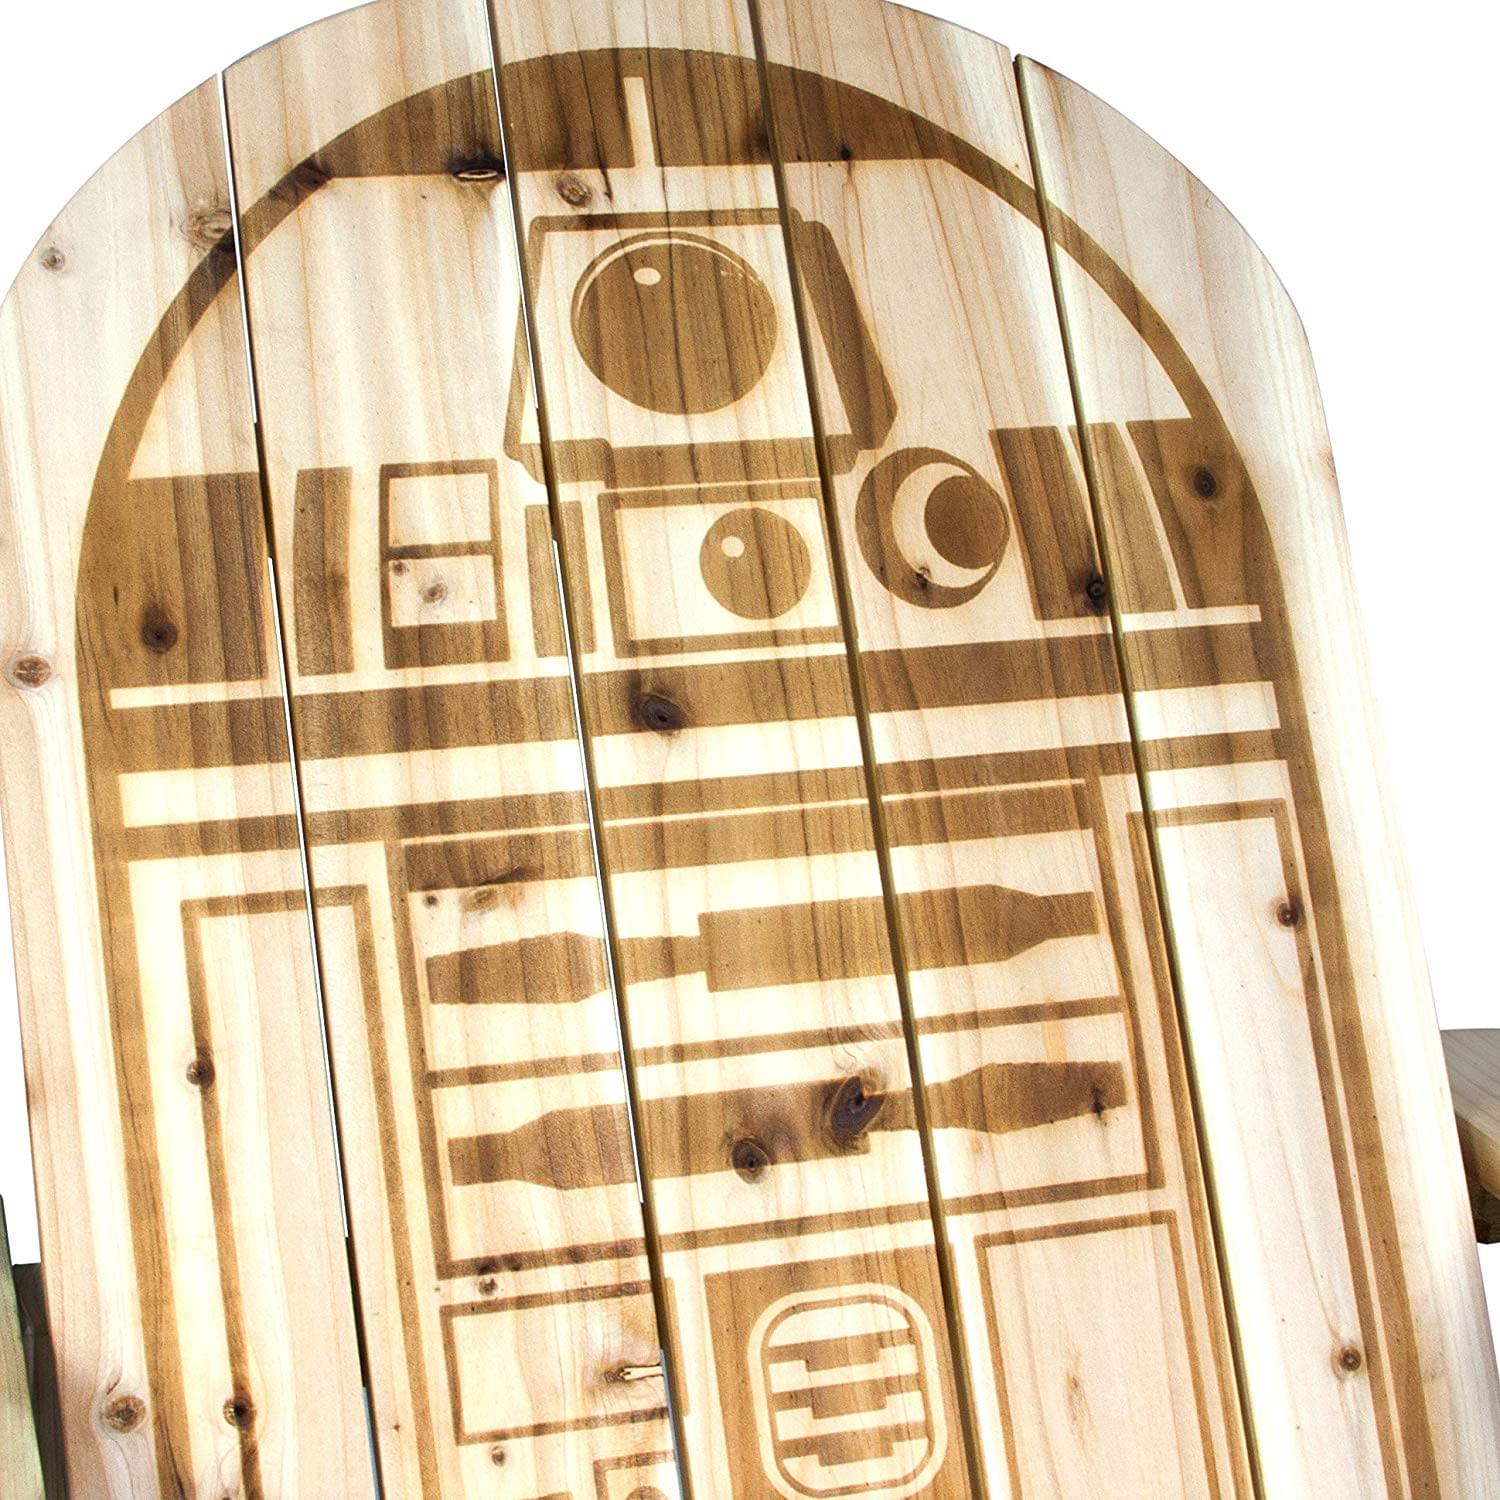 Star Wars R2-D2 Adirondack Wooden Outdoor Chair